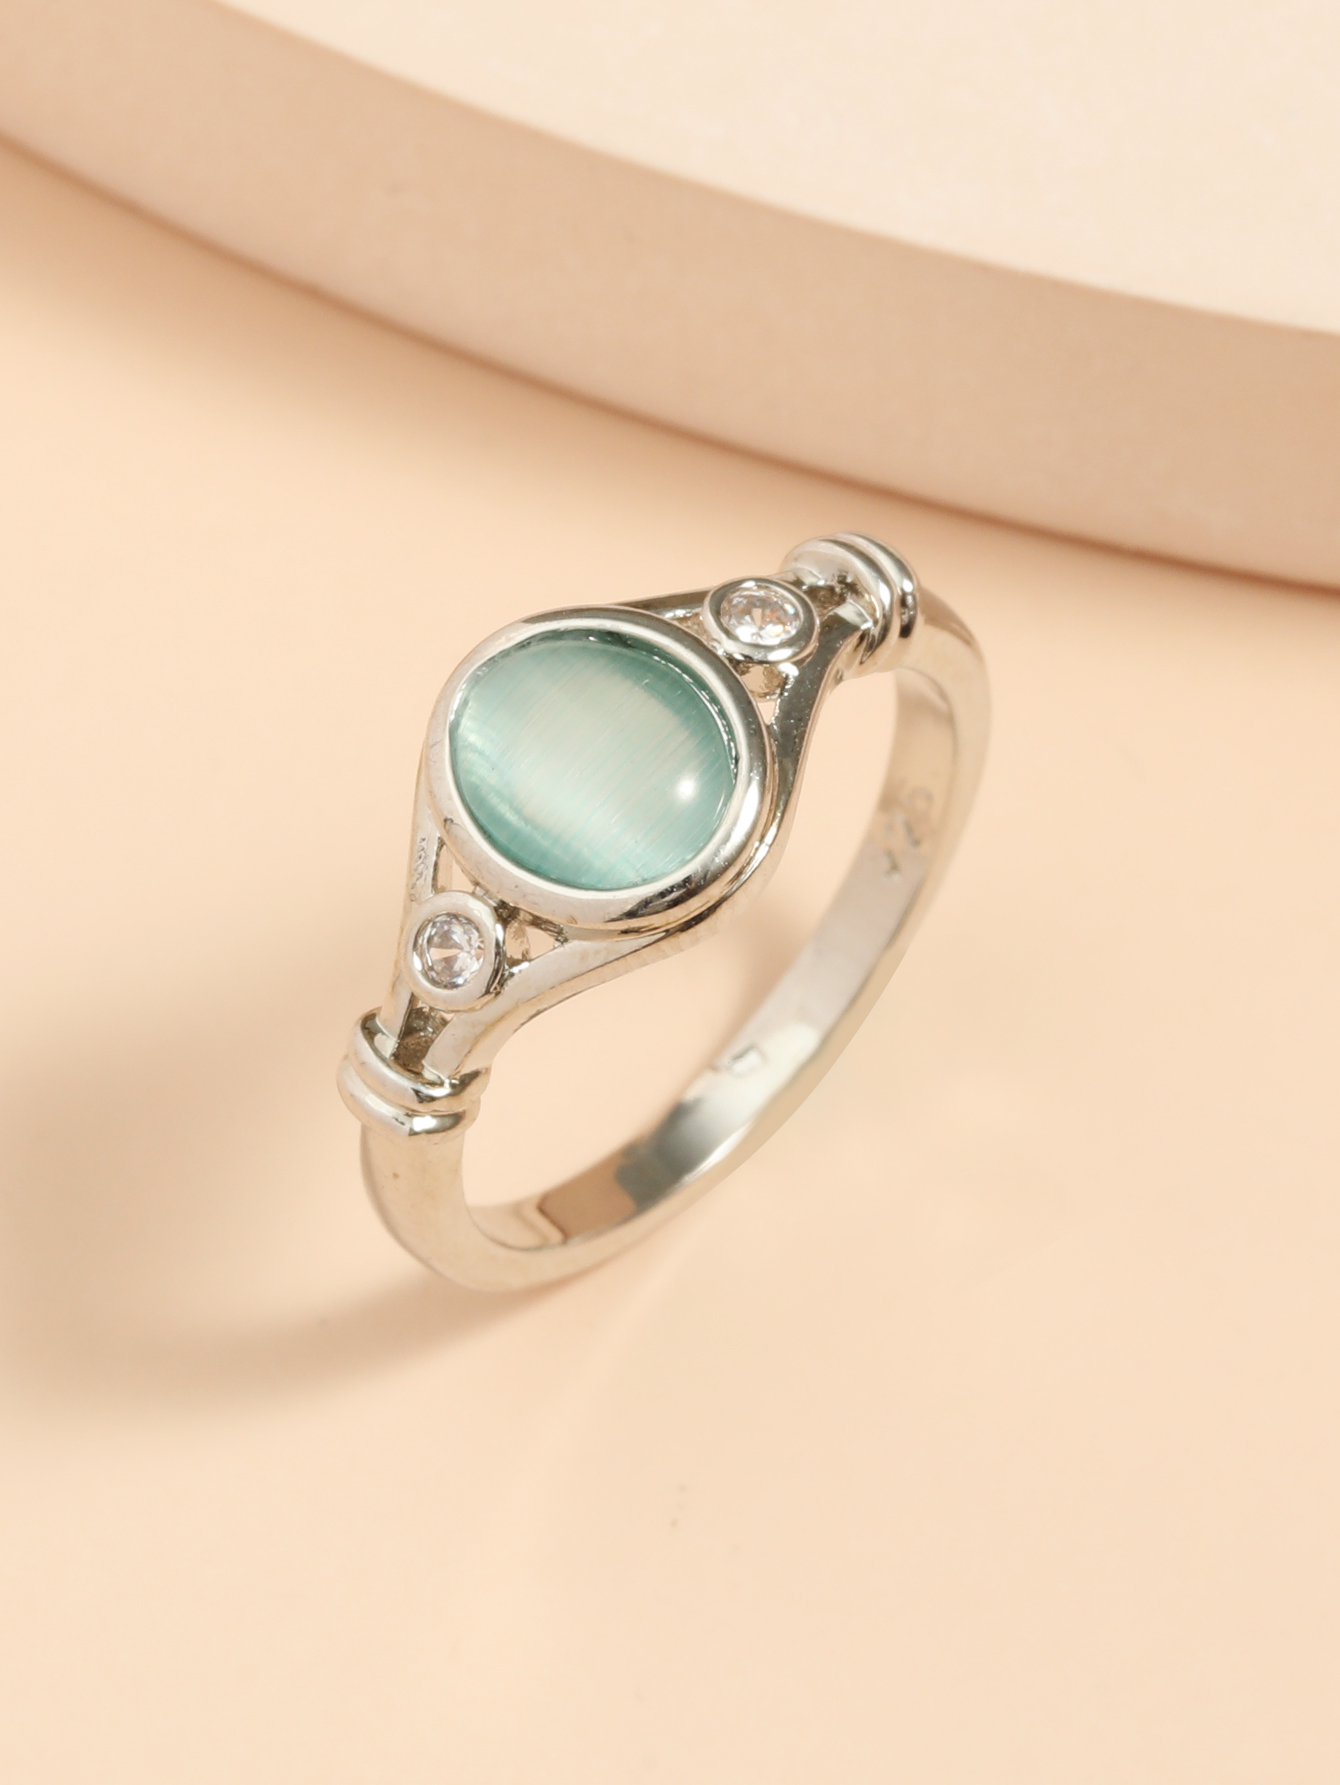 10pcs Oval Turquoise Natural Gemstone Ring 5 Sizes 2 each (Size: 6,7,8,9,10)|GCJ326|UK SELLER